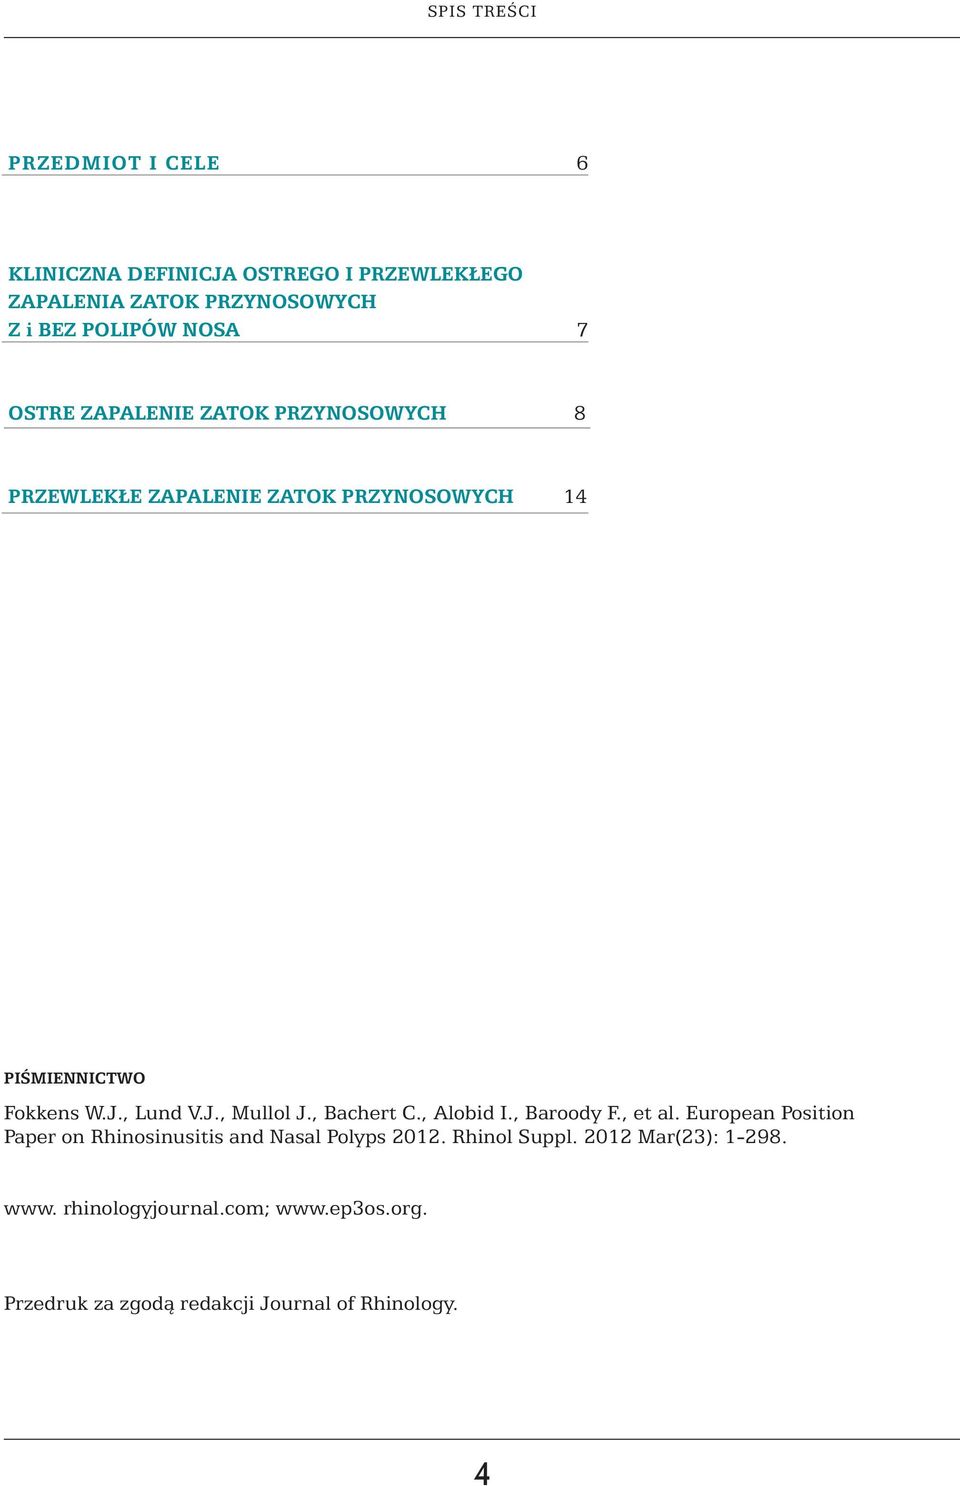 , Bachert C., Alobid I., Baroody F., et al. European Position Paper on Rhinosinusitis and Nasal Polyps 2012. Rhinol Suppl.